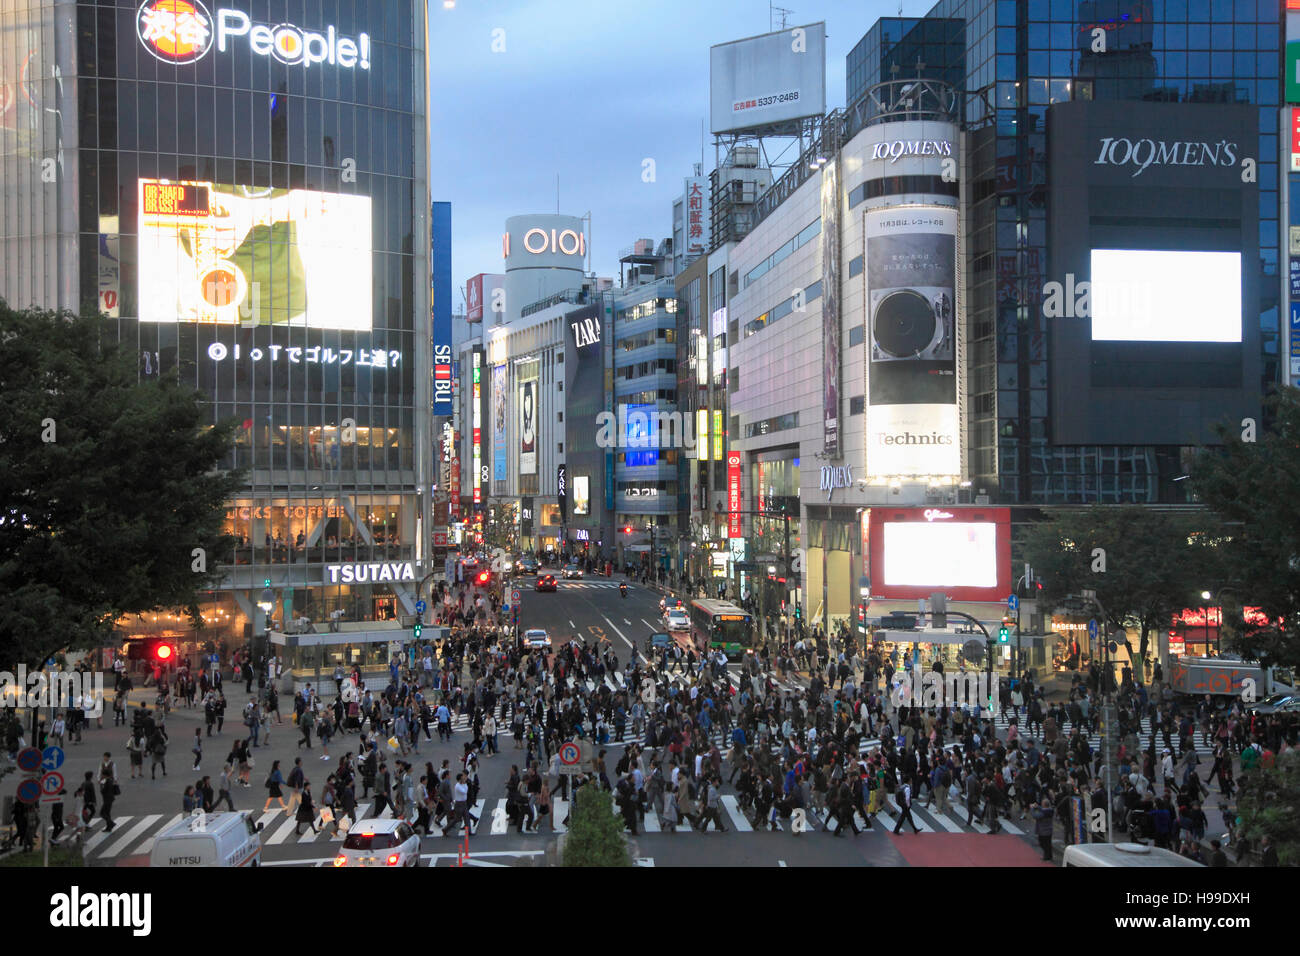 Japan, Tokyo, Shibuya, street scene, crowd, people, Shibuya Crossing, Stock Photo